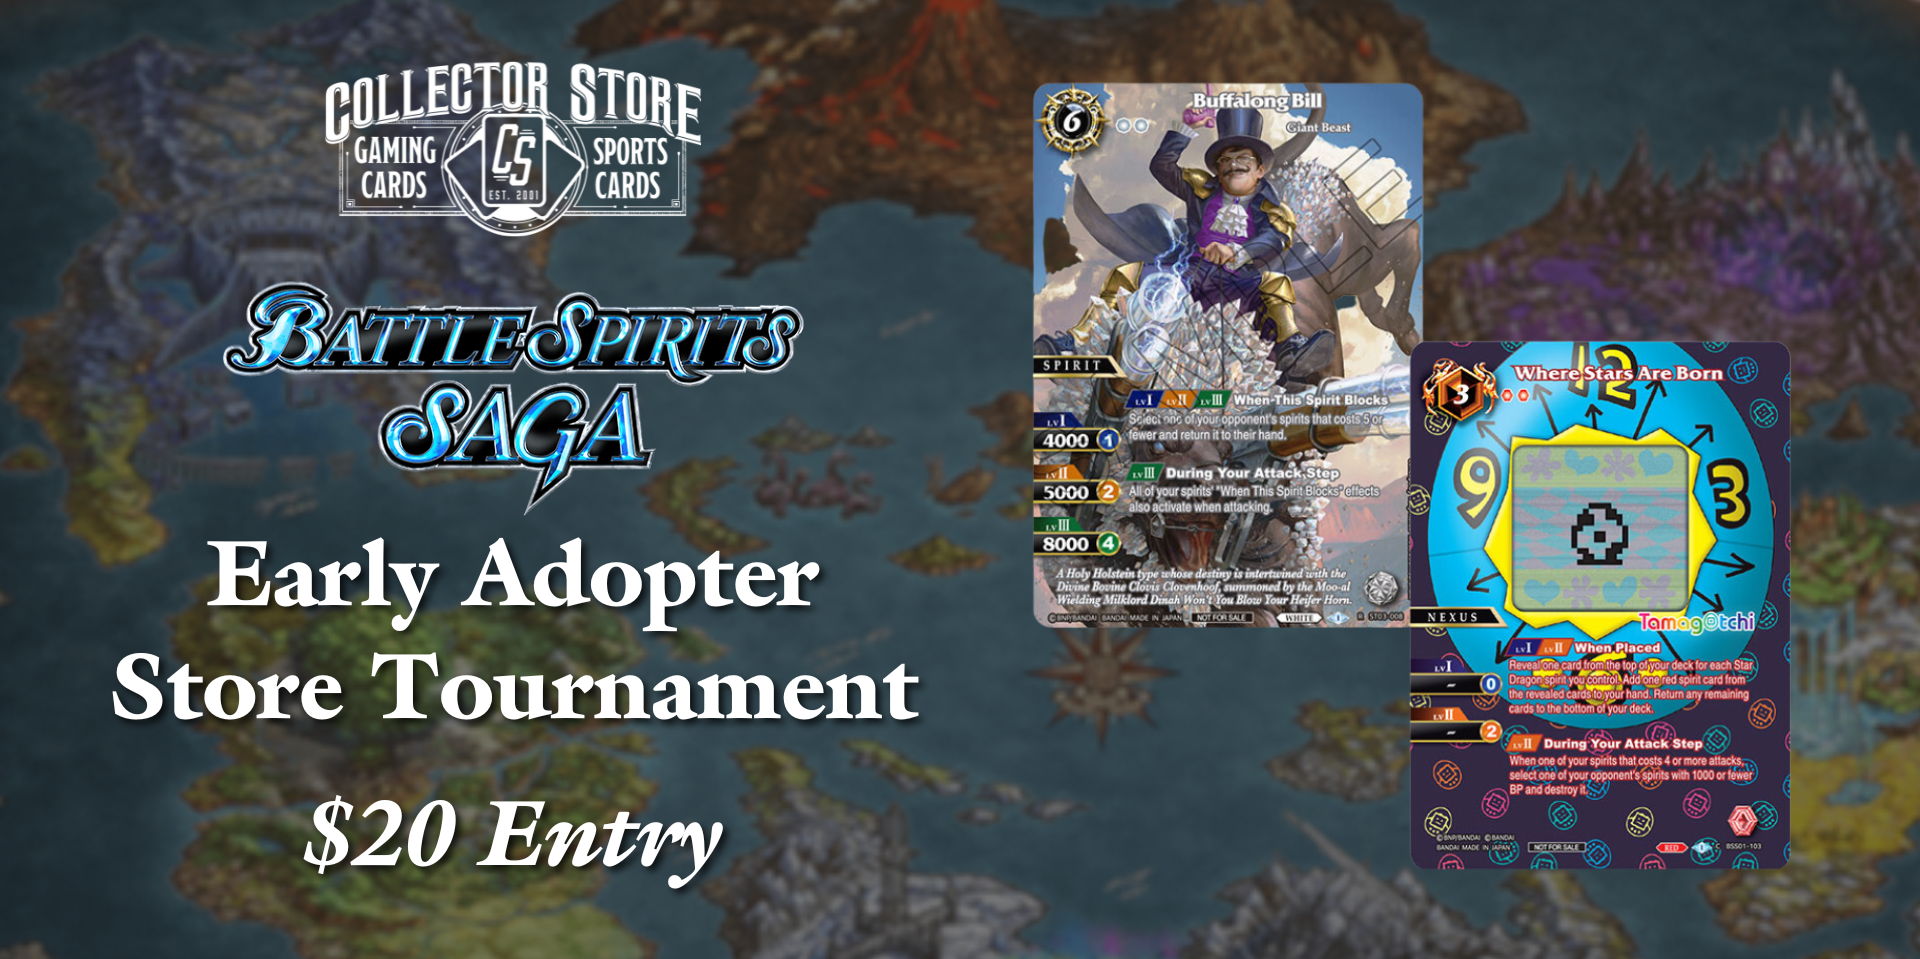 Battle Spirits Saga Early Adopter Store Tournament promotional image